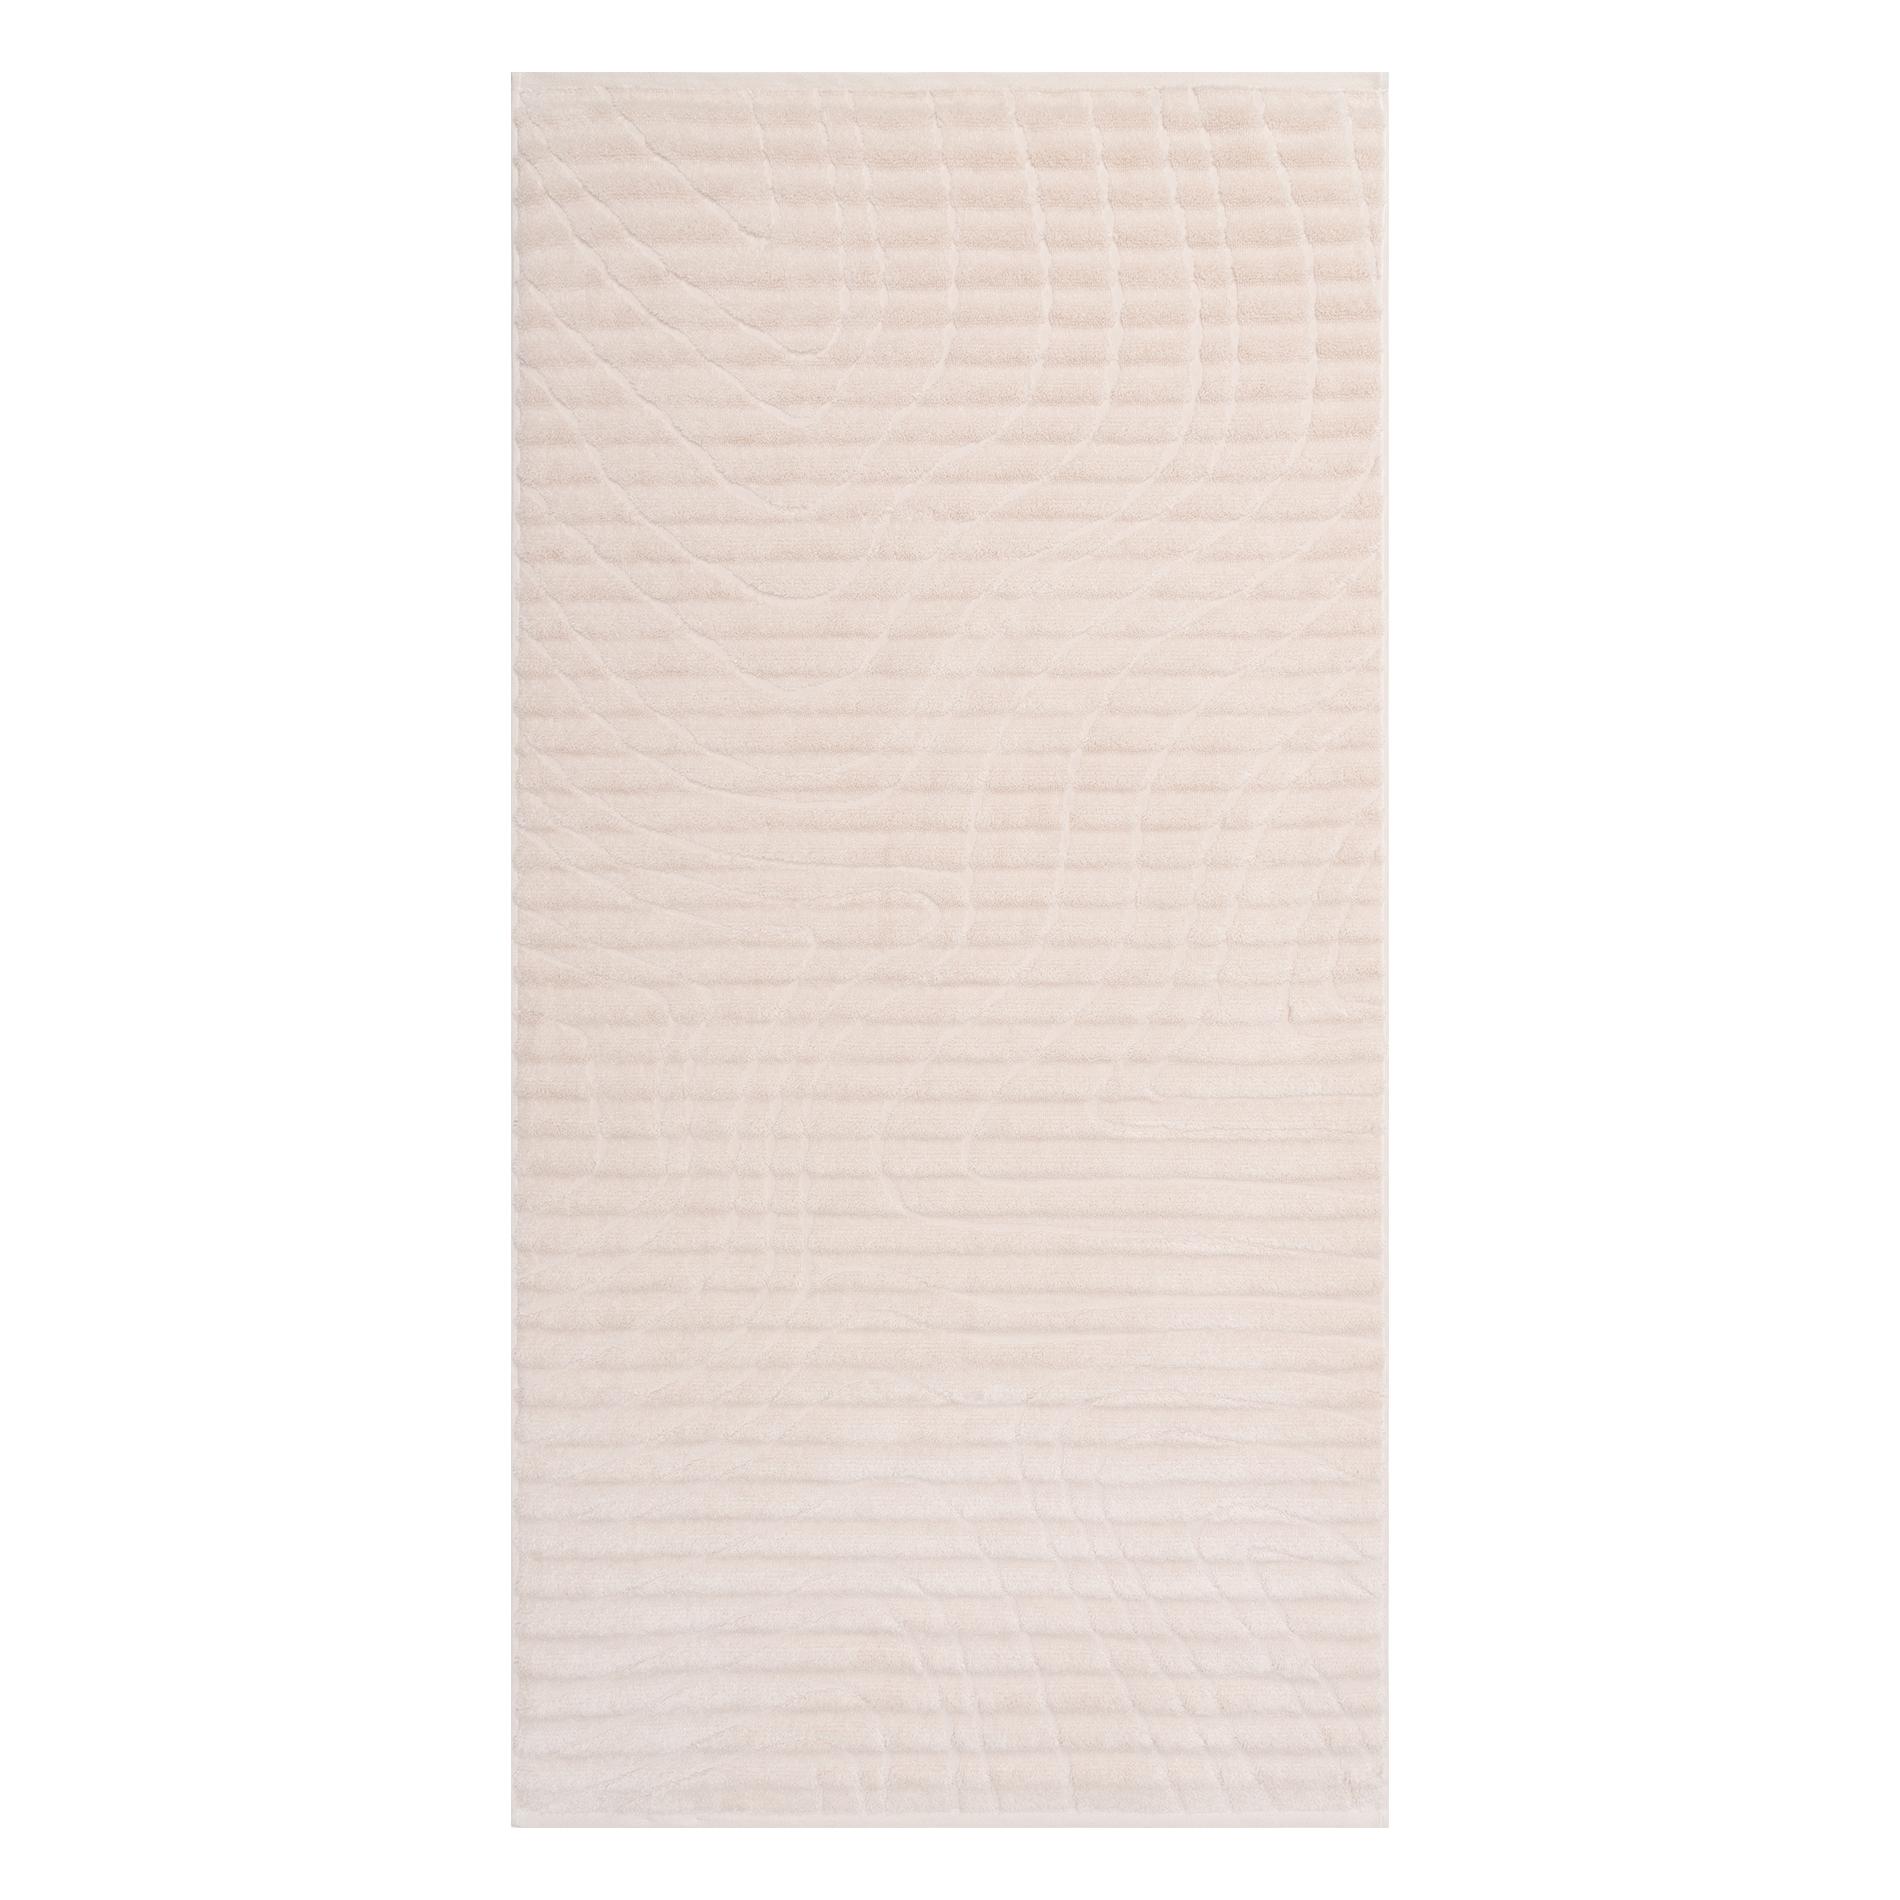 Махровое полотенце Cleanelly Albero bianco молочное 70х140 см